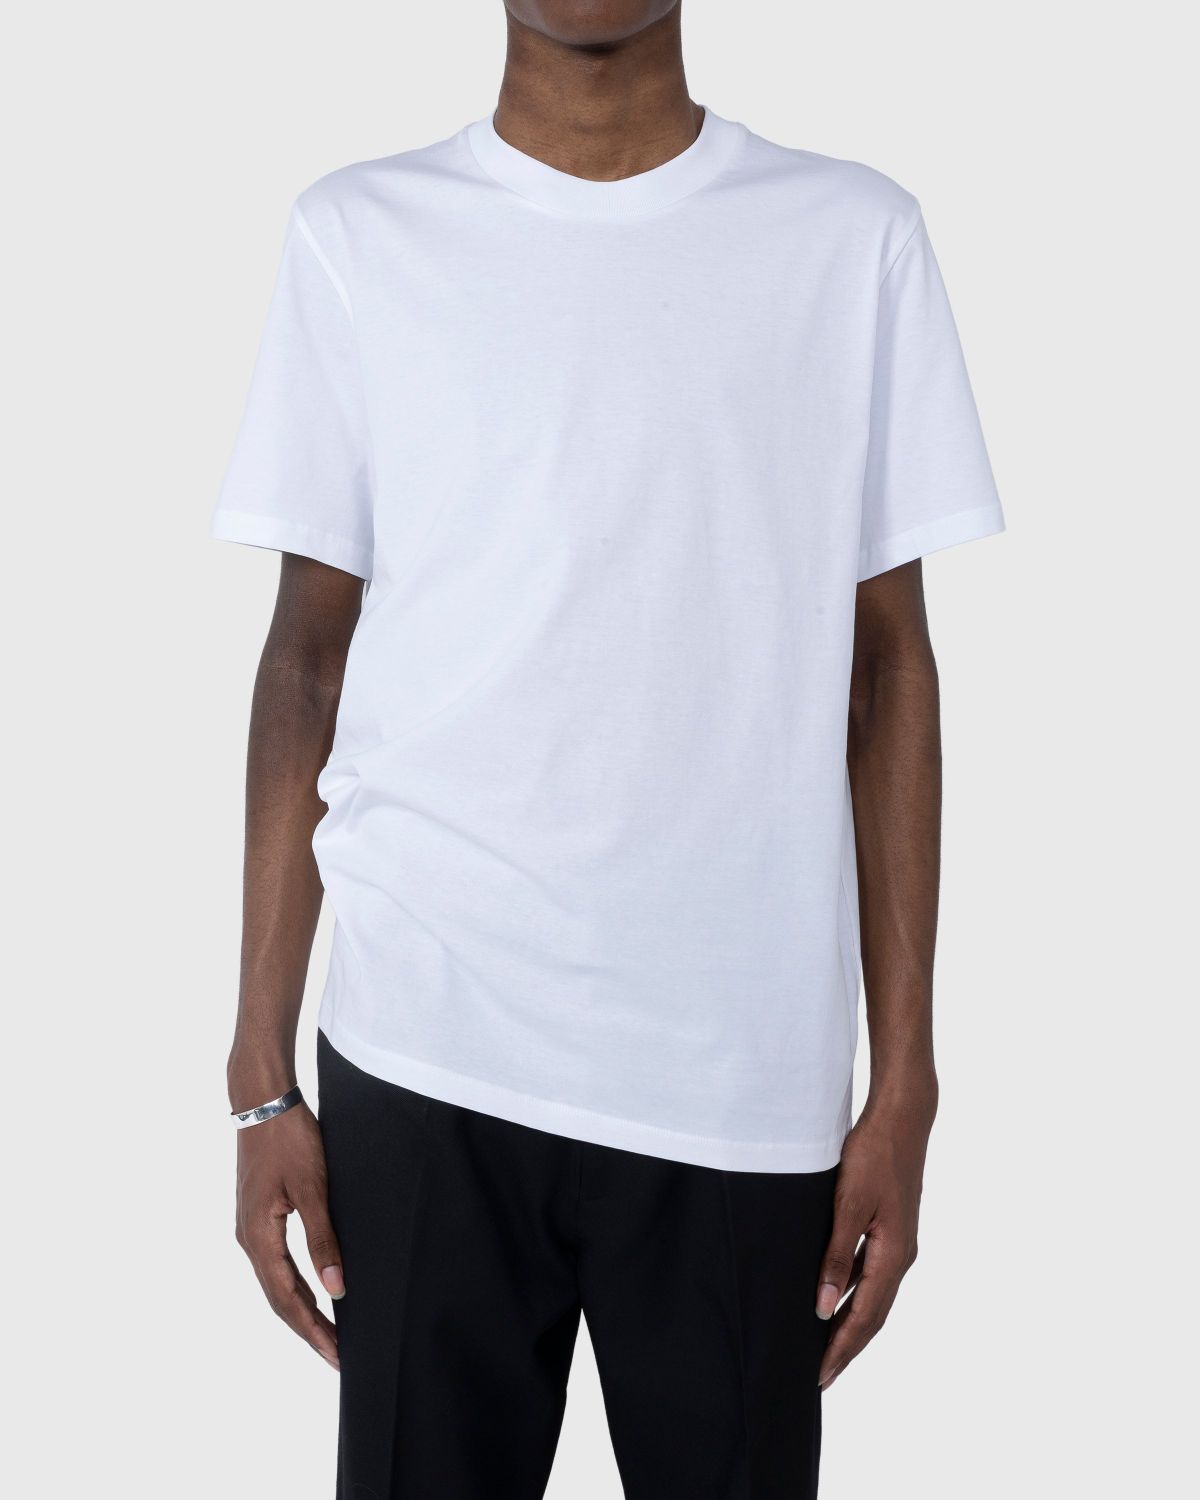 Jil Sander – Solid Cotton T-Shirt White - Tops - White - Image 2